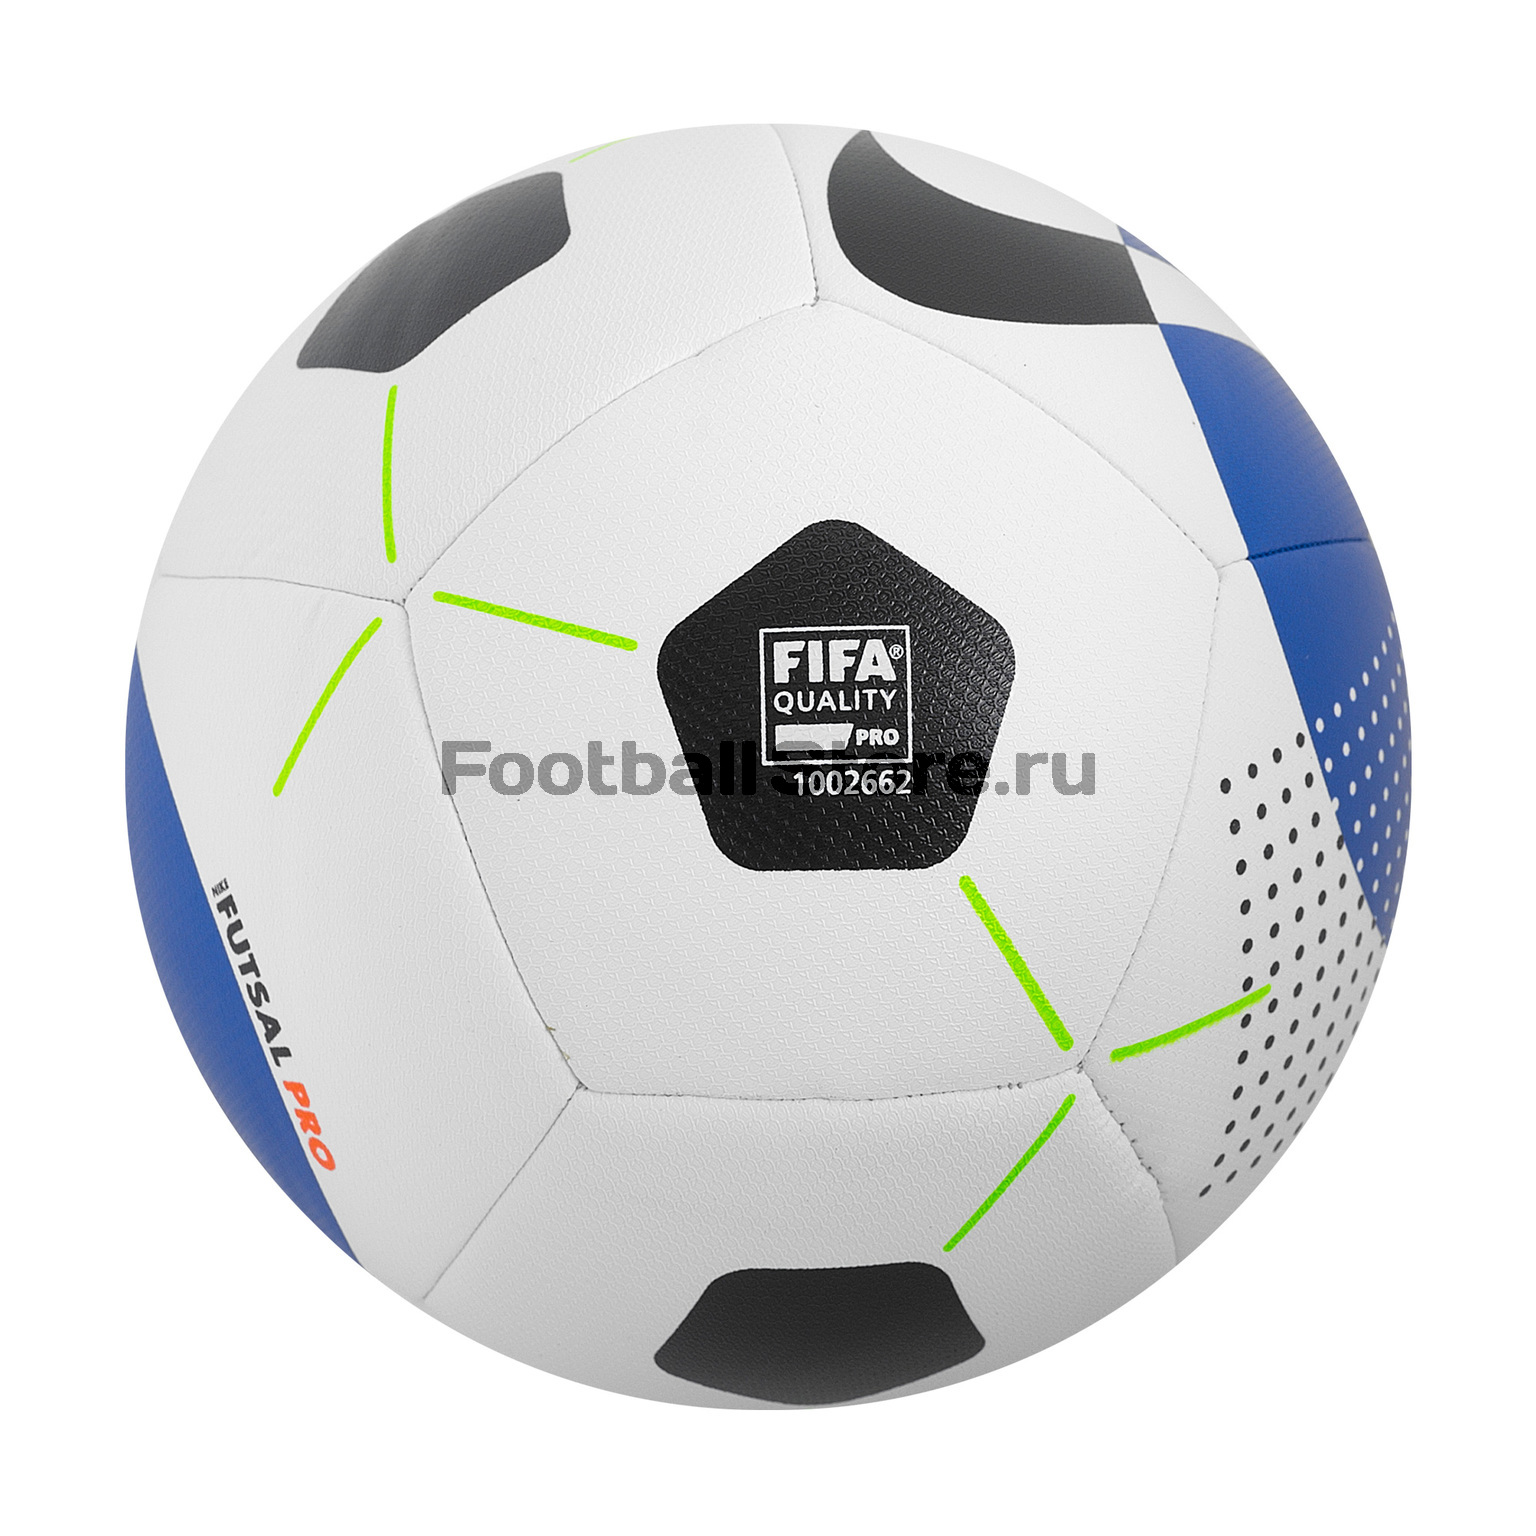 Футзальный мяч Nike Futsal Pro SC3971-101